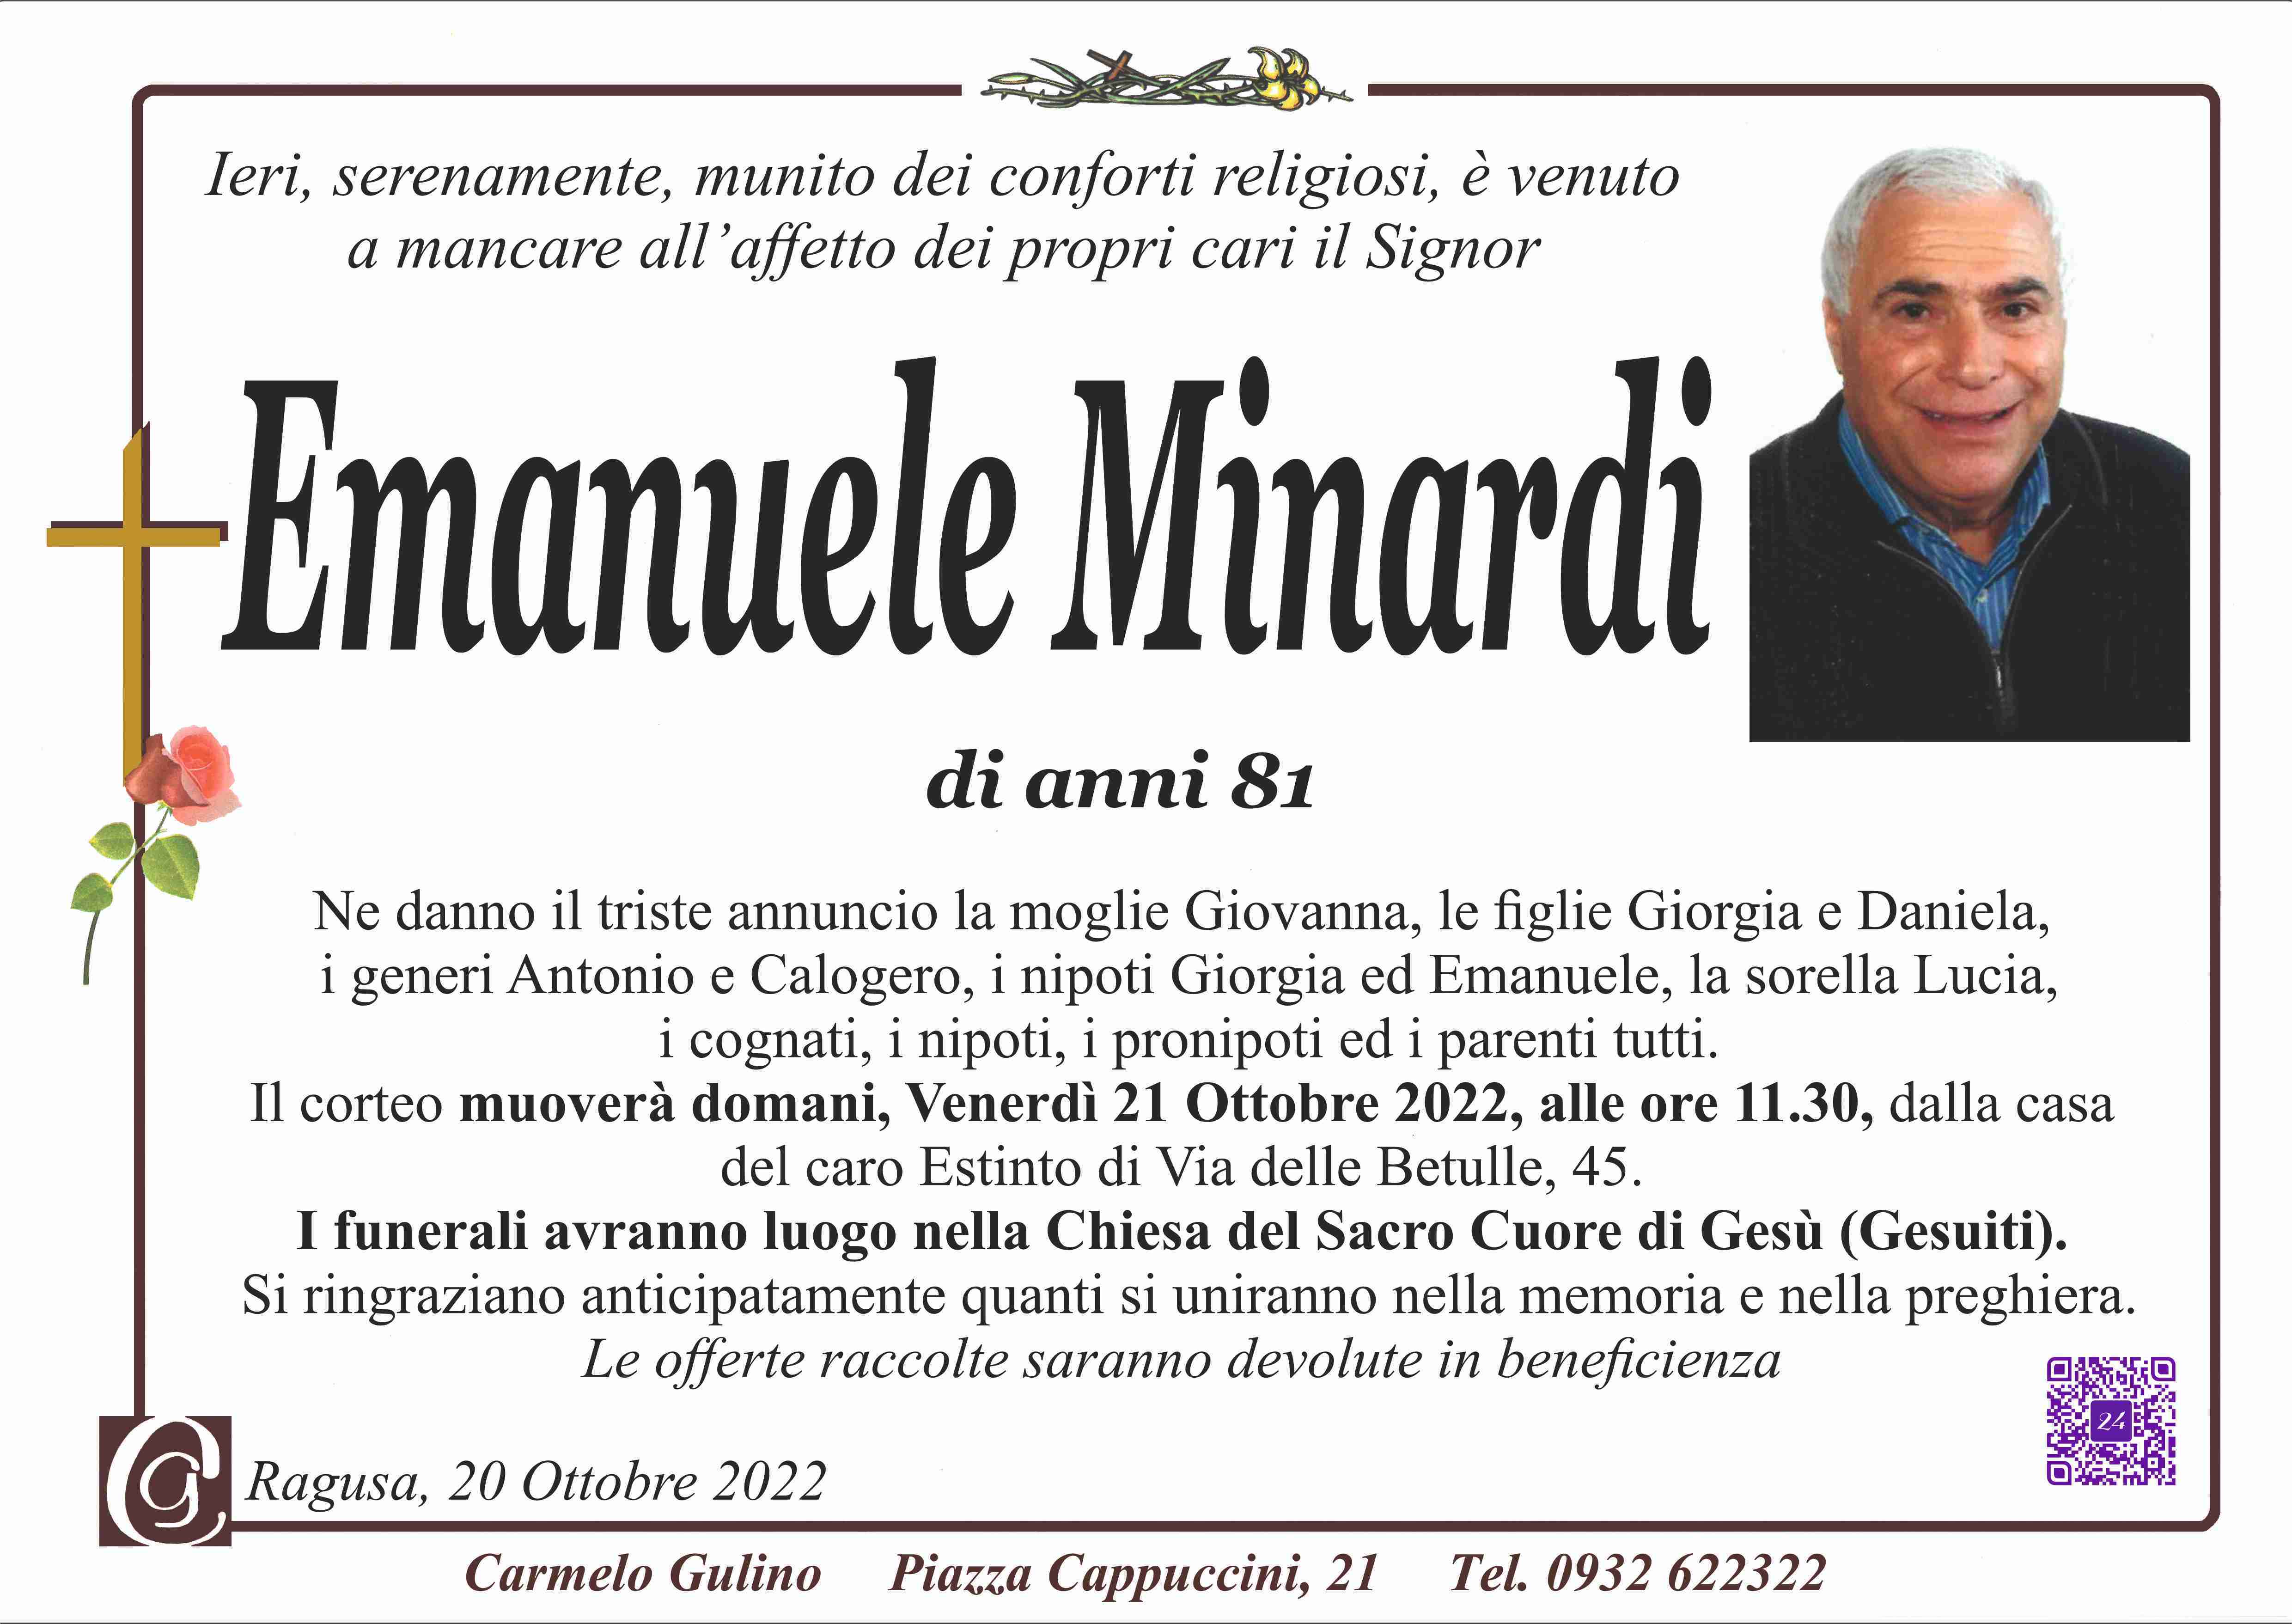 Emanuele Minardi